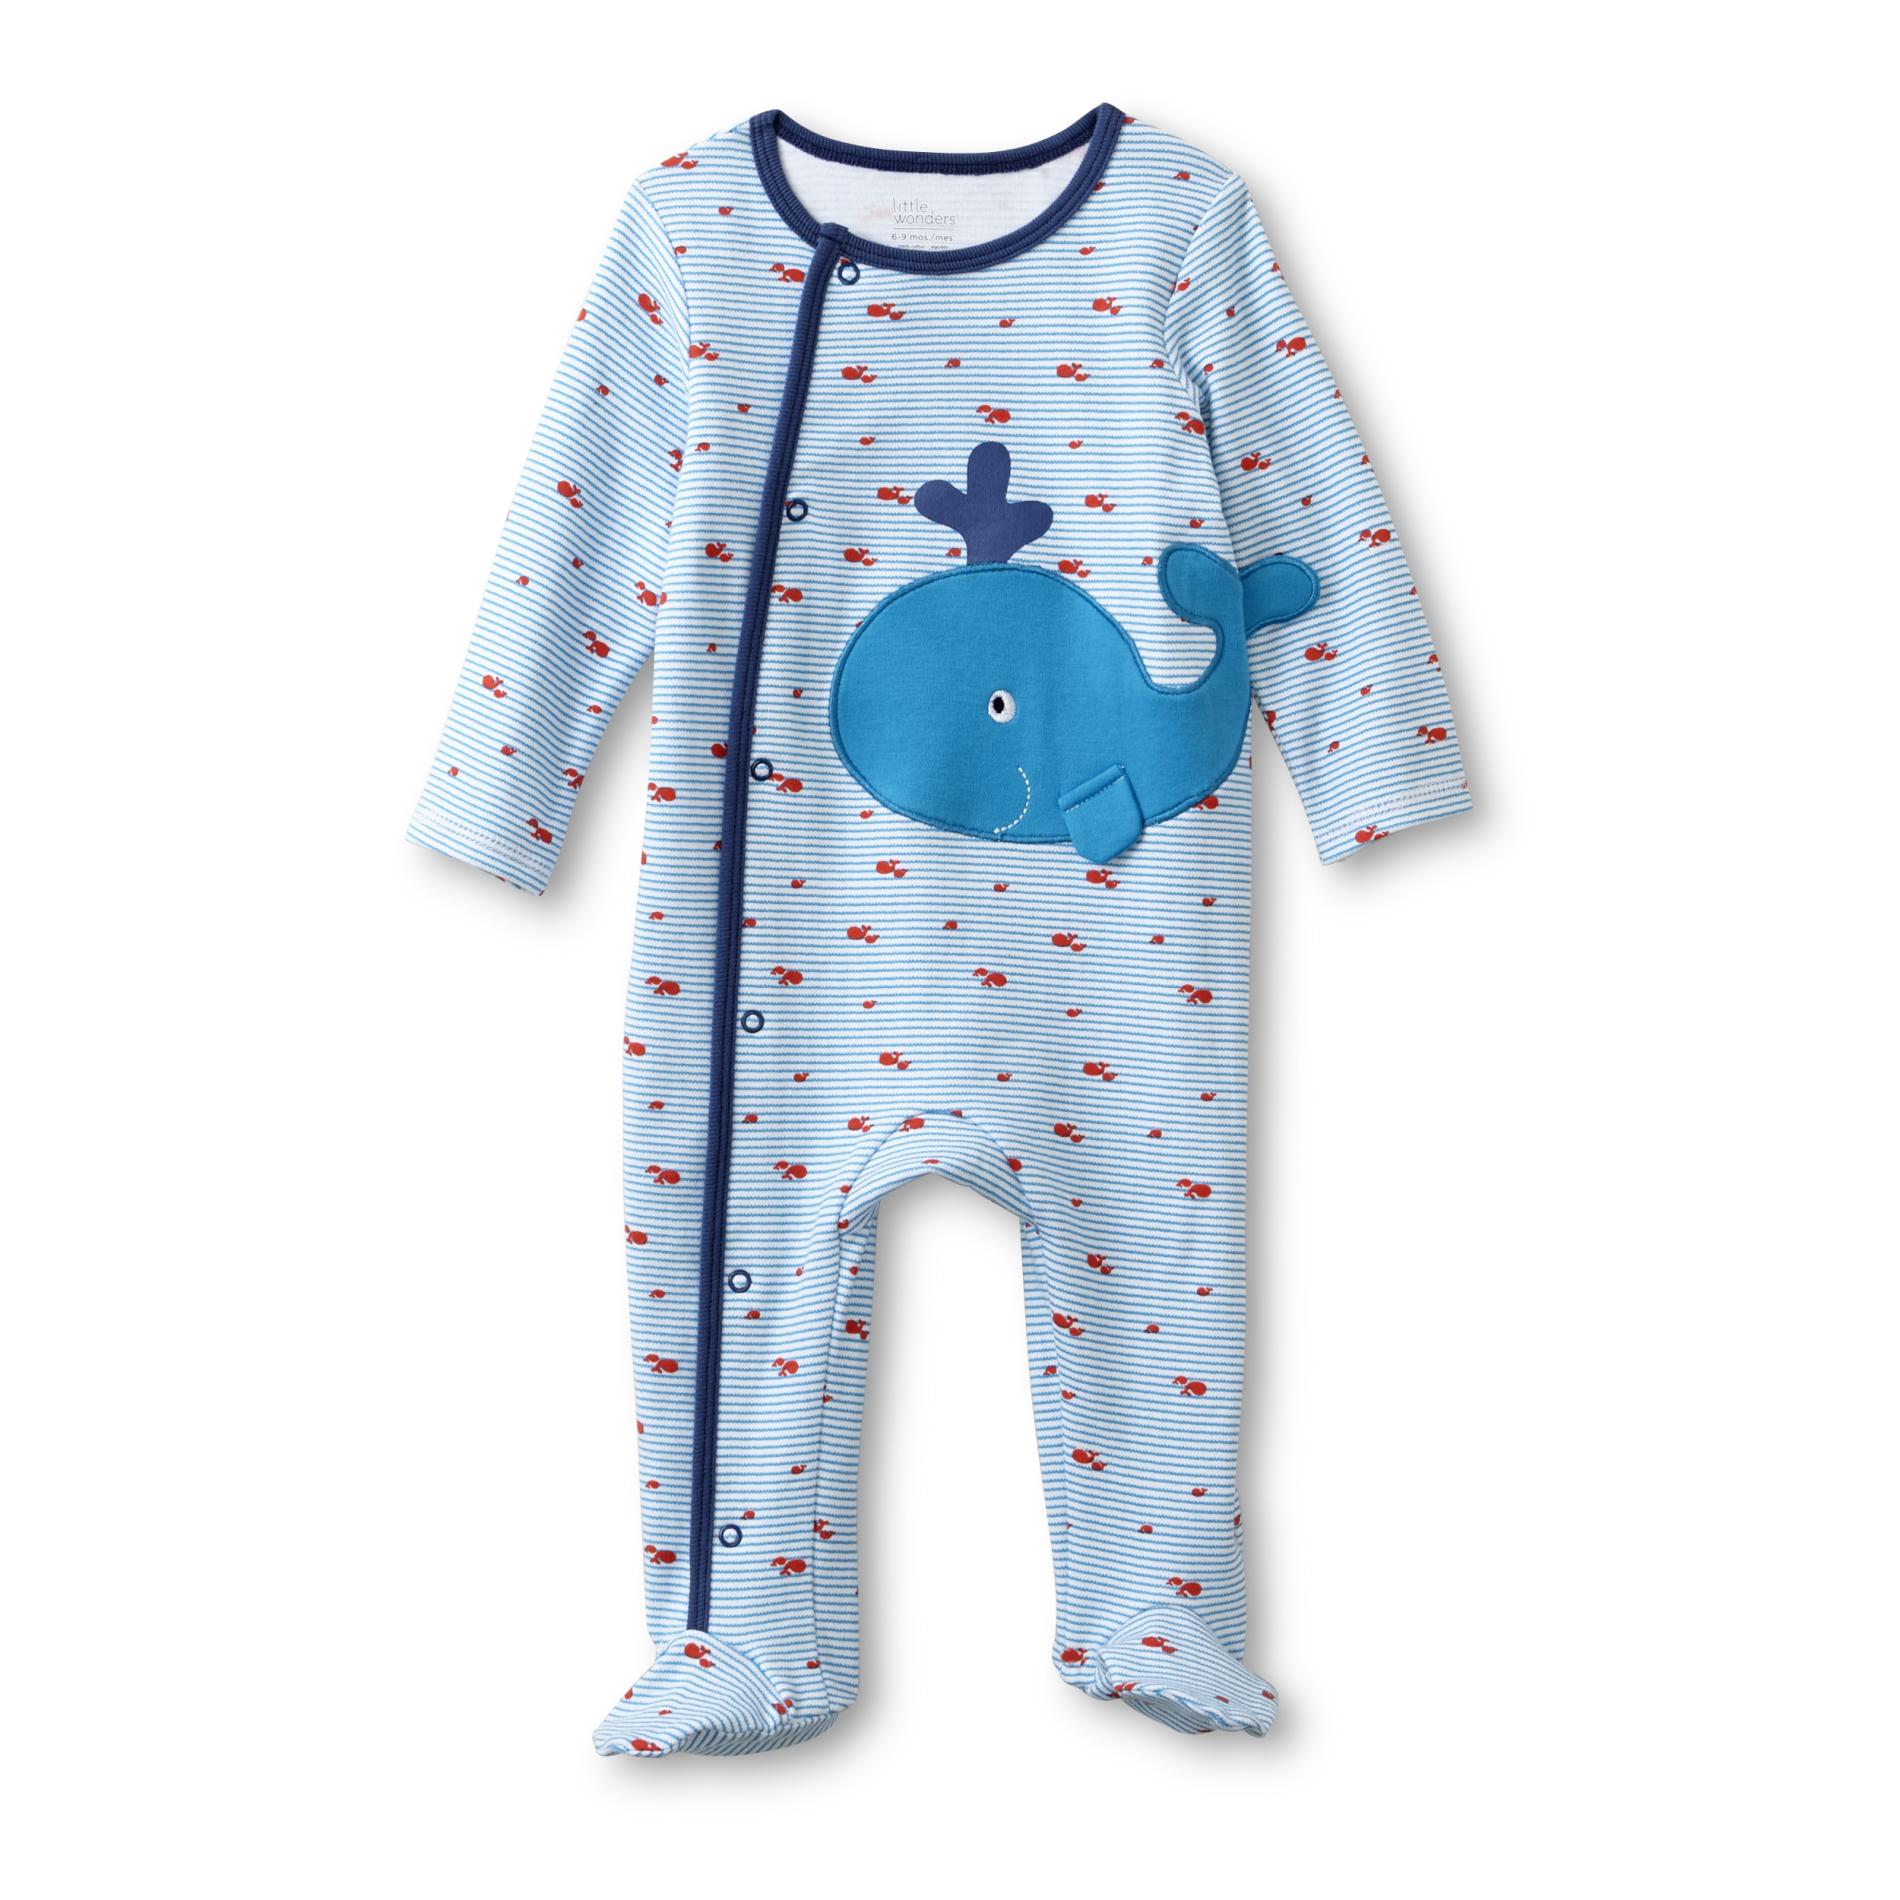 Little Wonders Newborn Boy's Footed Sleeper Pajamas - Whale